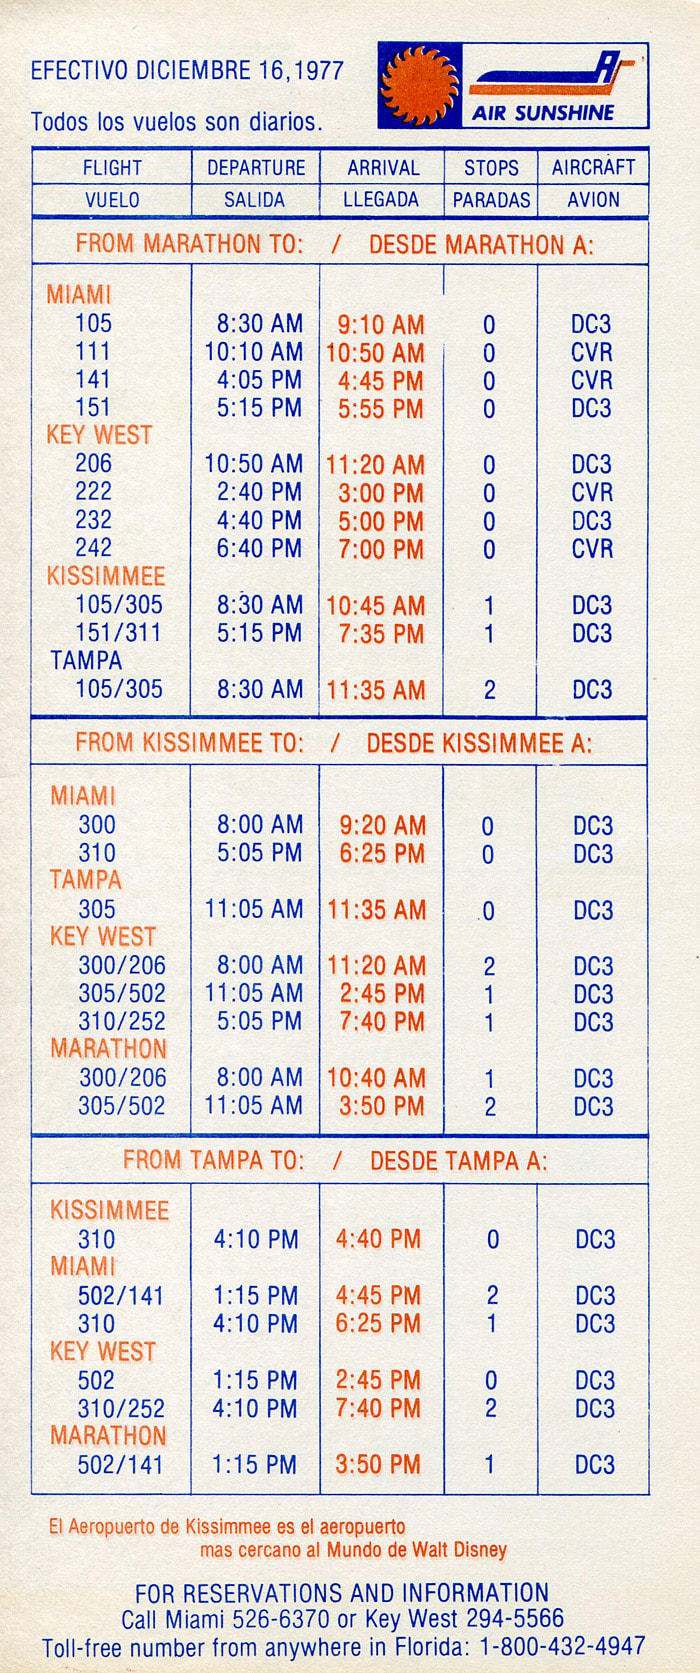 Air Sunshine timetable 1977